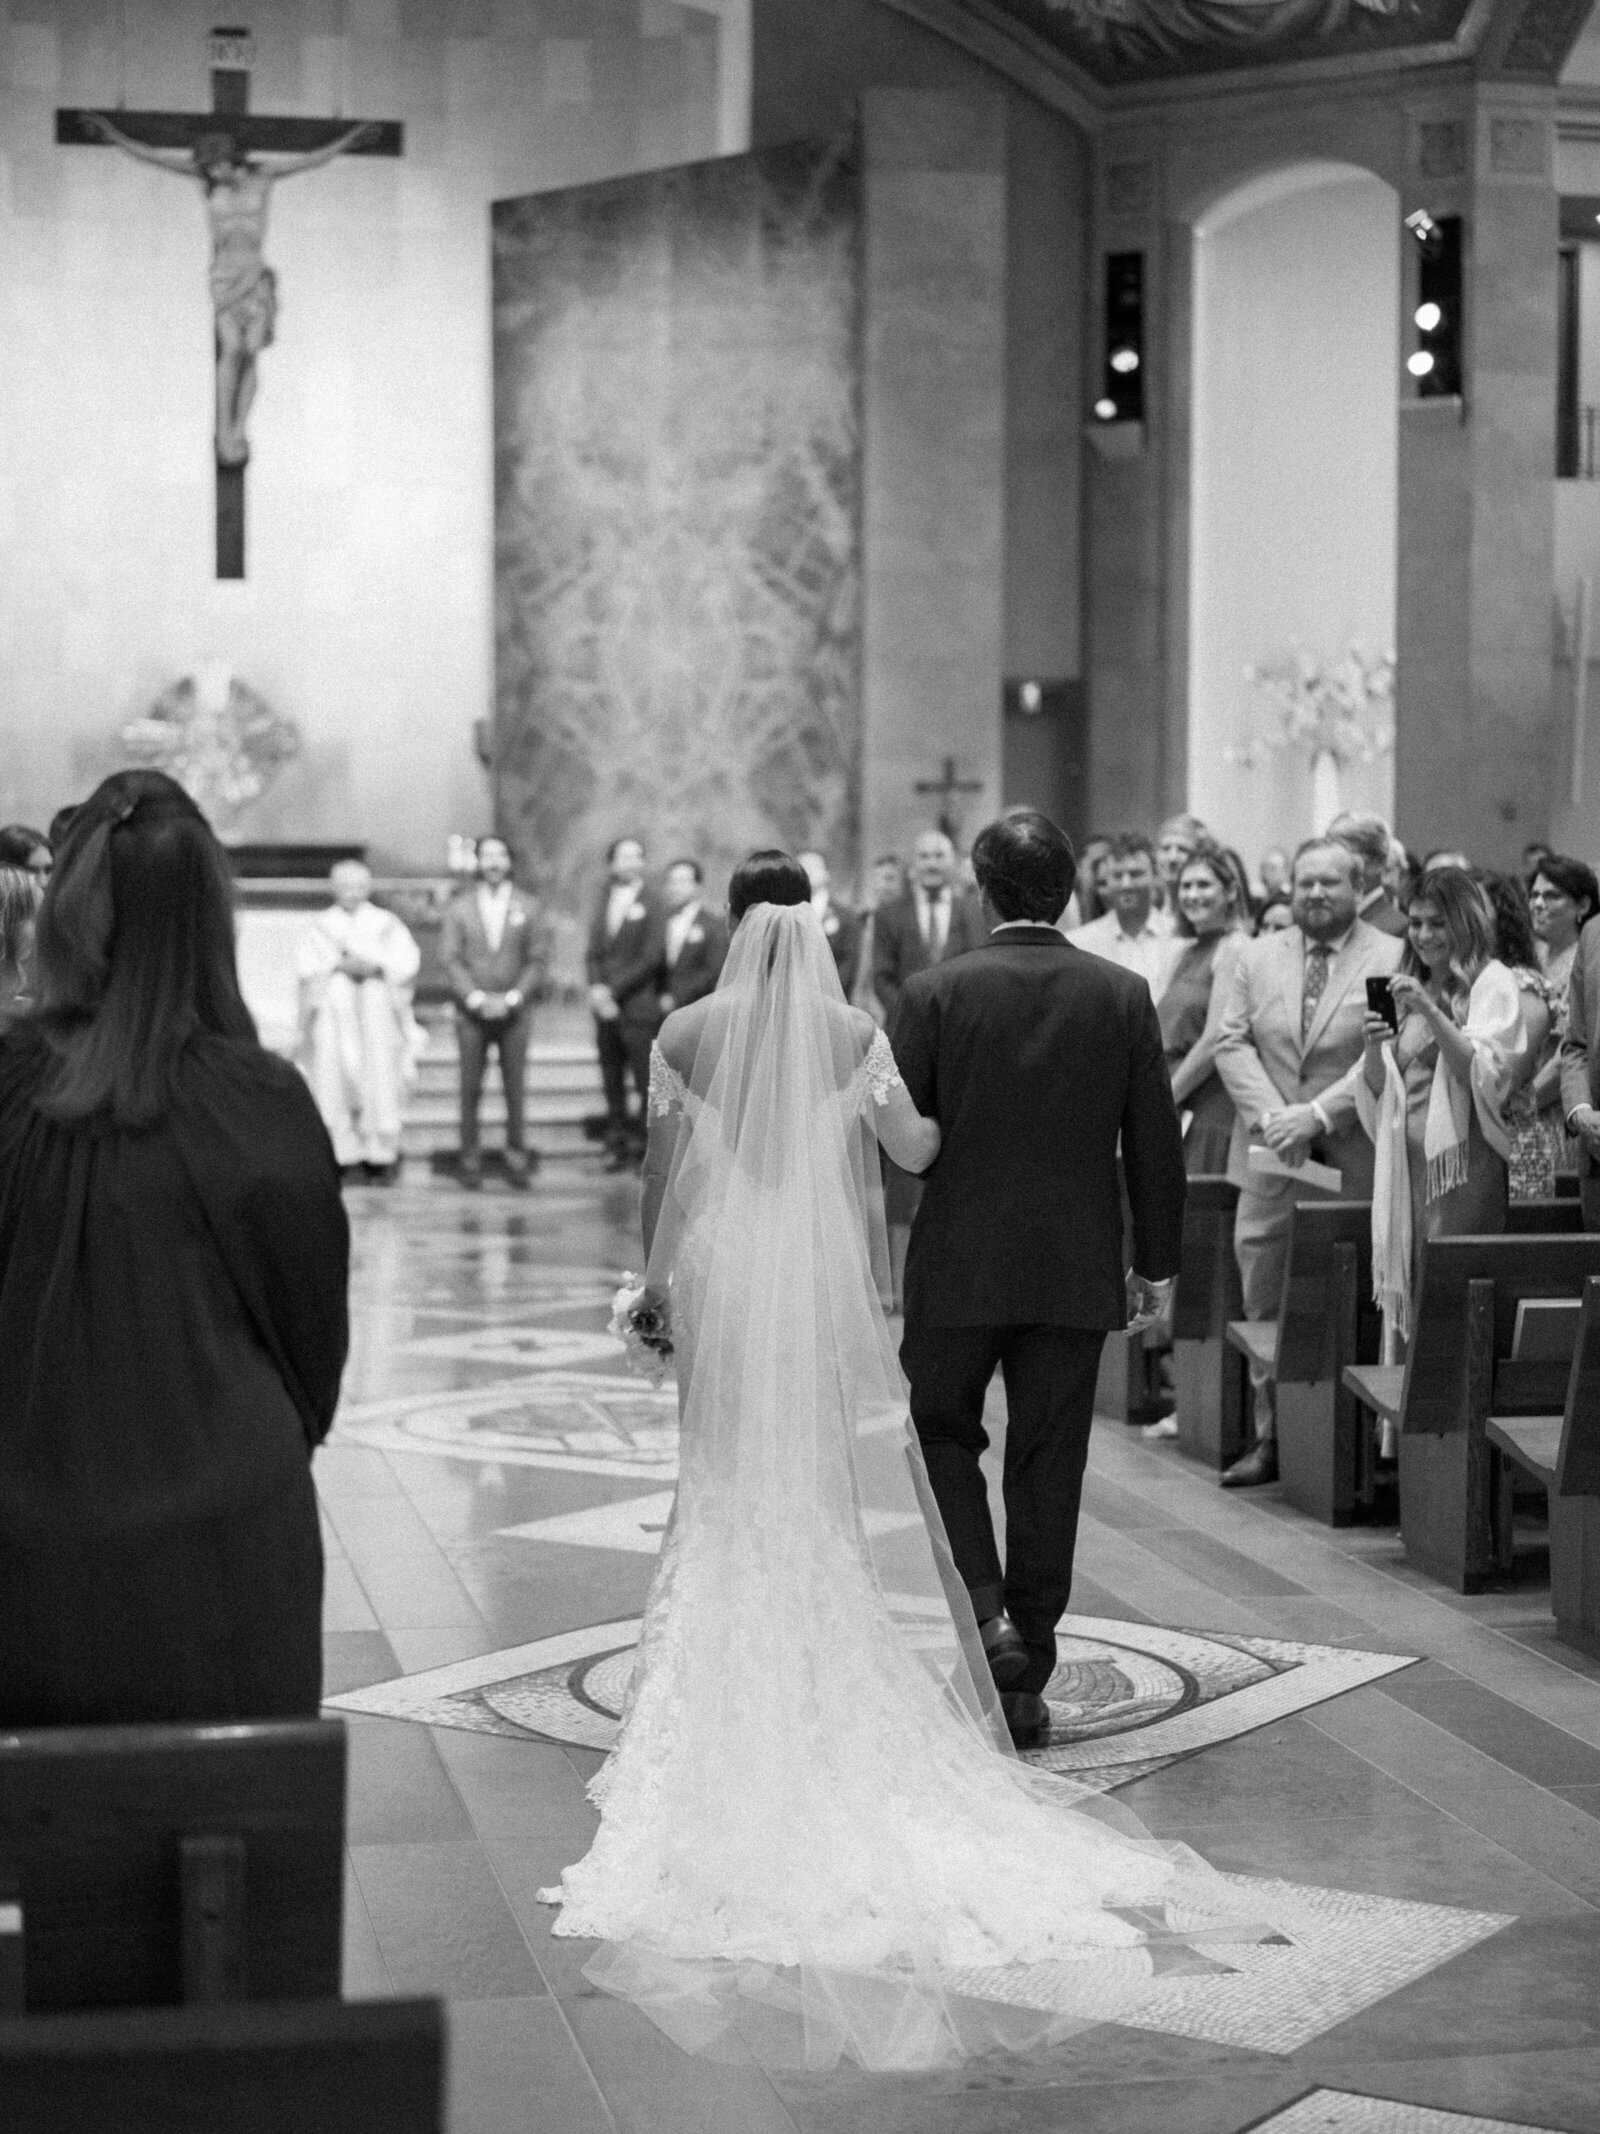 Arcidiacono Wedding_Ceremony-256